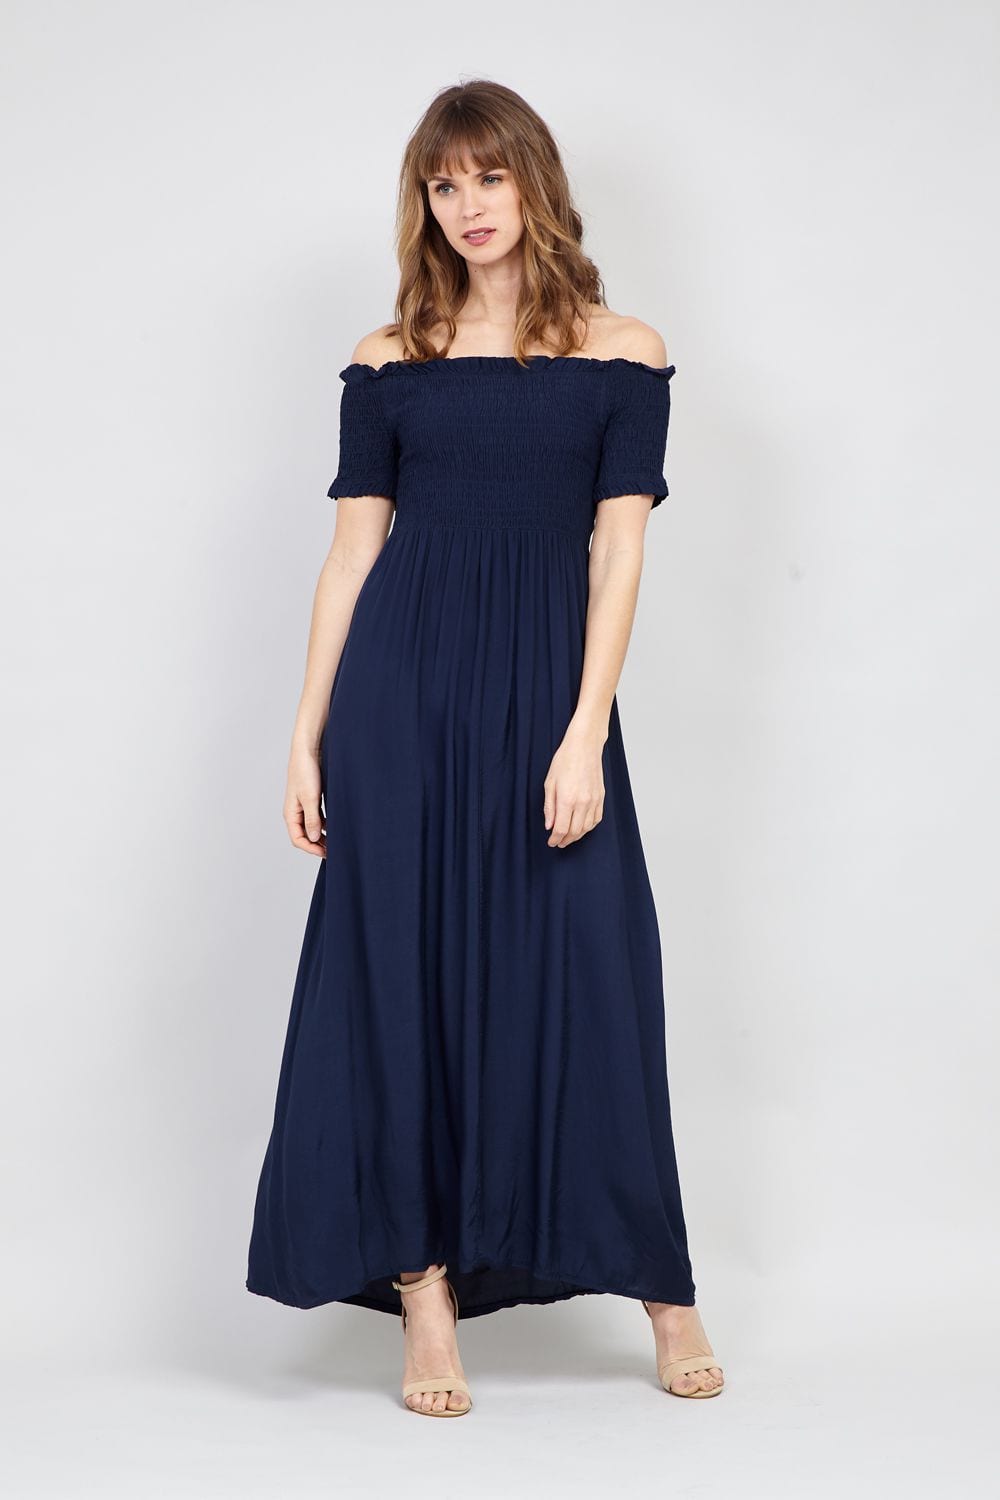 Navy | Shirred Top Maxi Dress